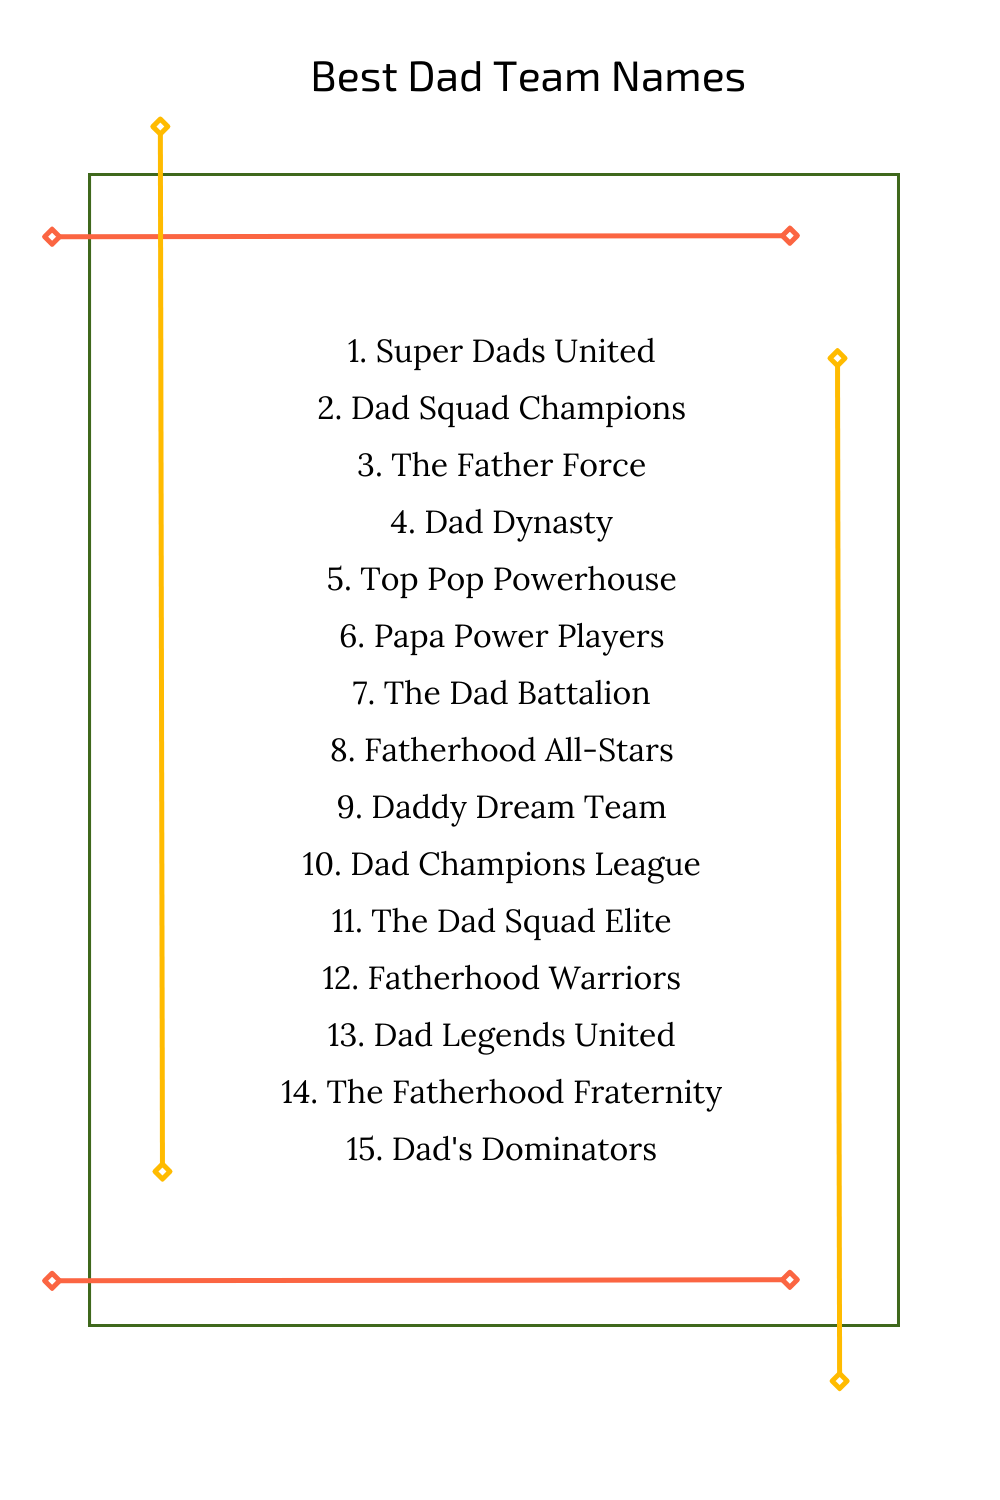 Best Dad Team Names